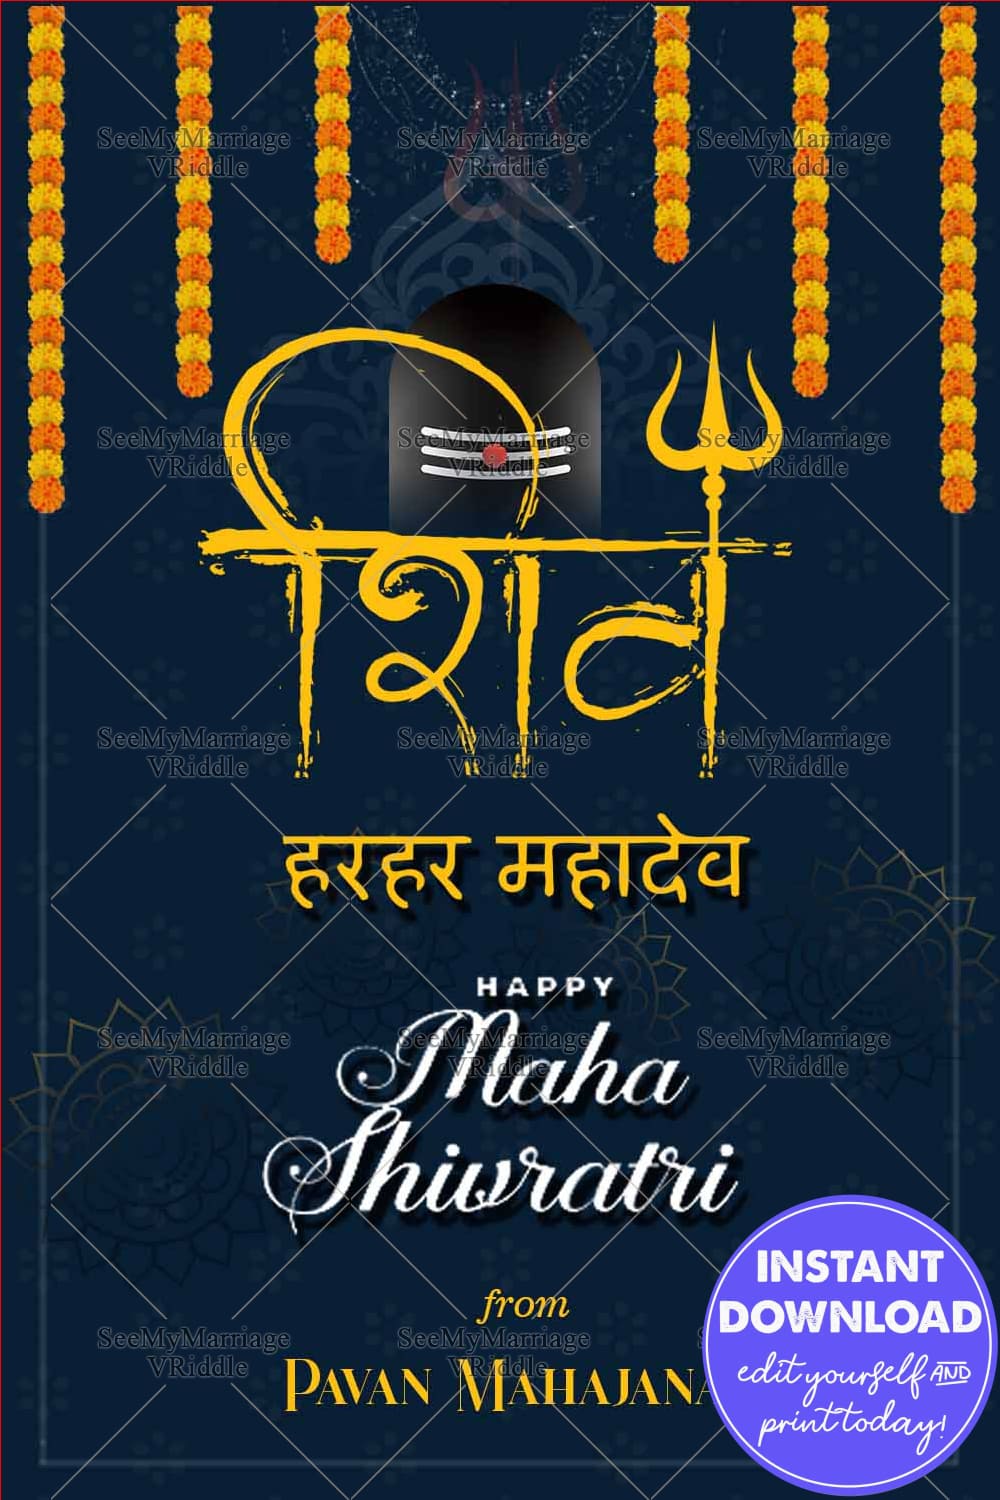 Hara Hara Shambho Maha Shivrathri Festival Greeting Card In Blue Theme Background with Lord Shiva Idol